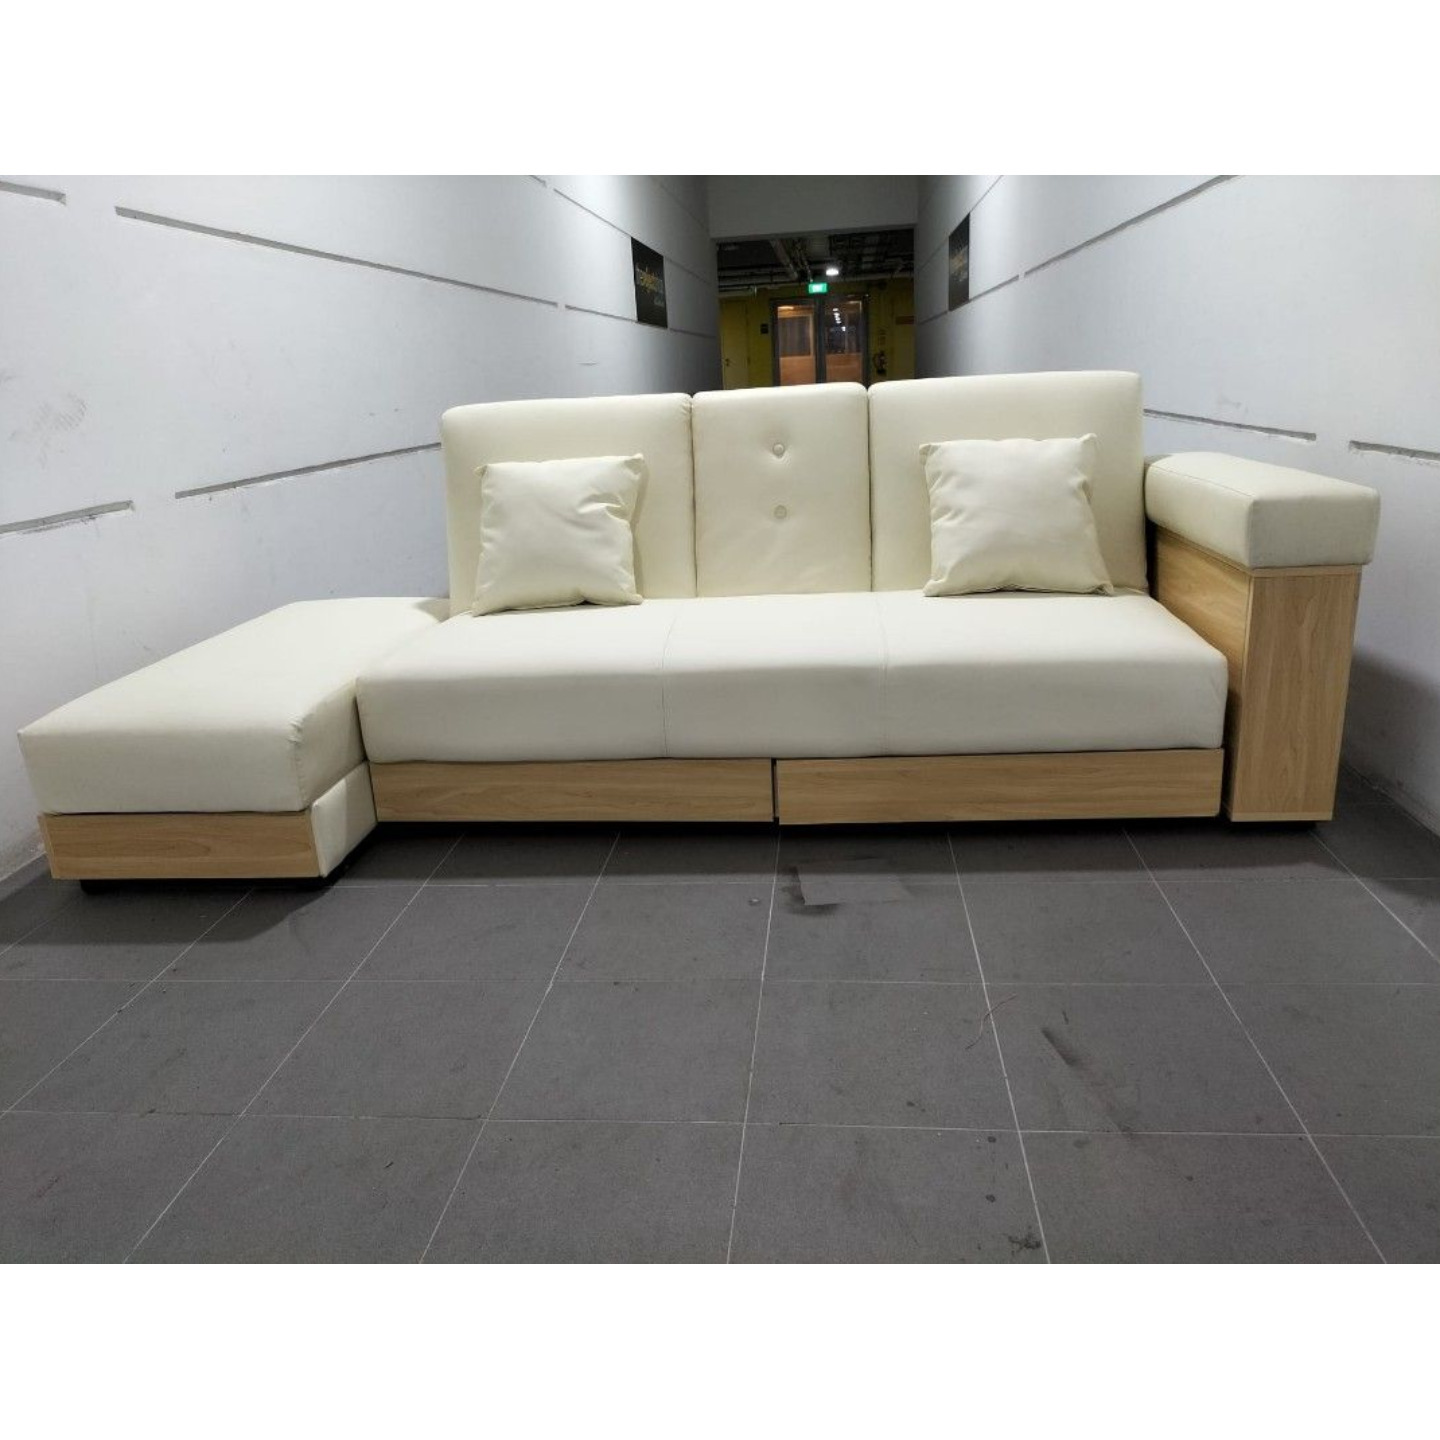 MIKO Storage Sofa Bed in BEIGE FABRIC